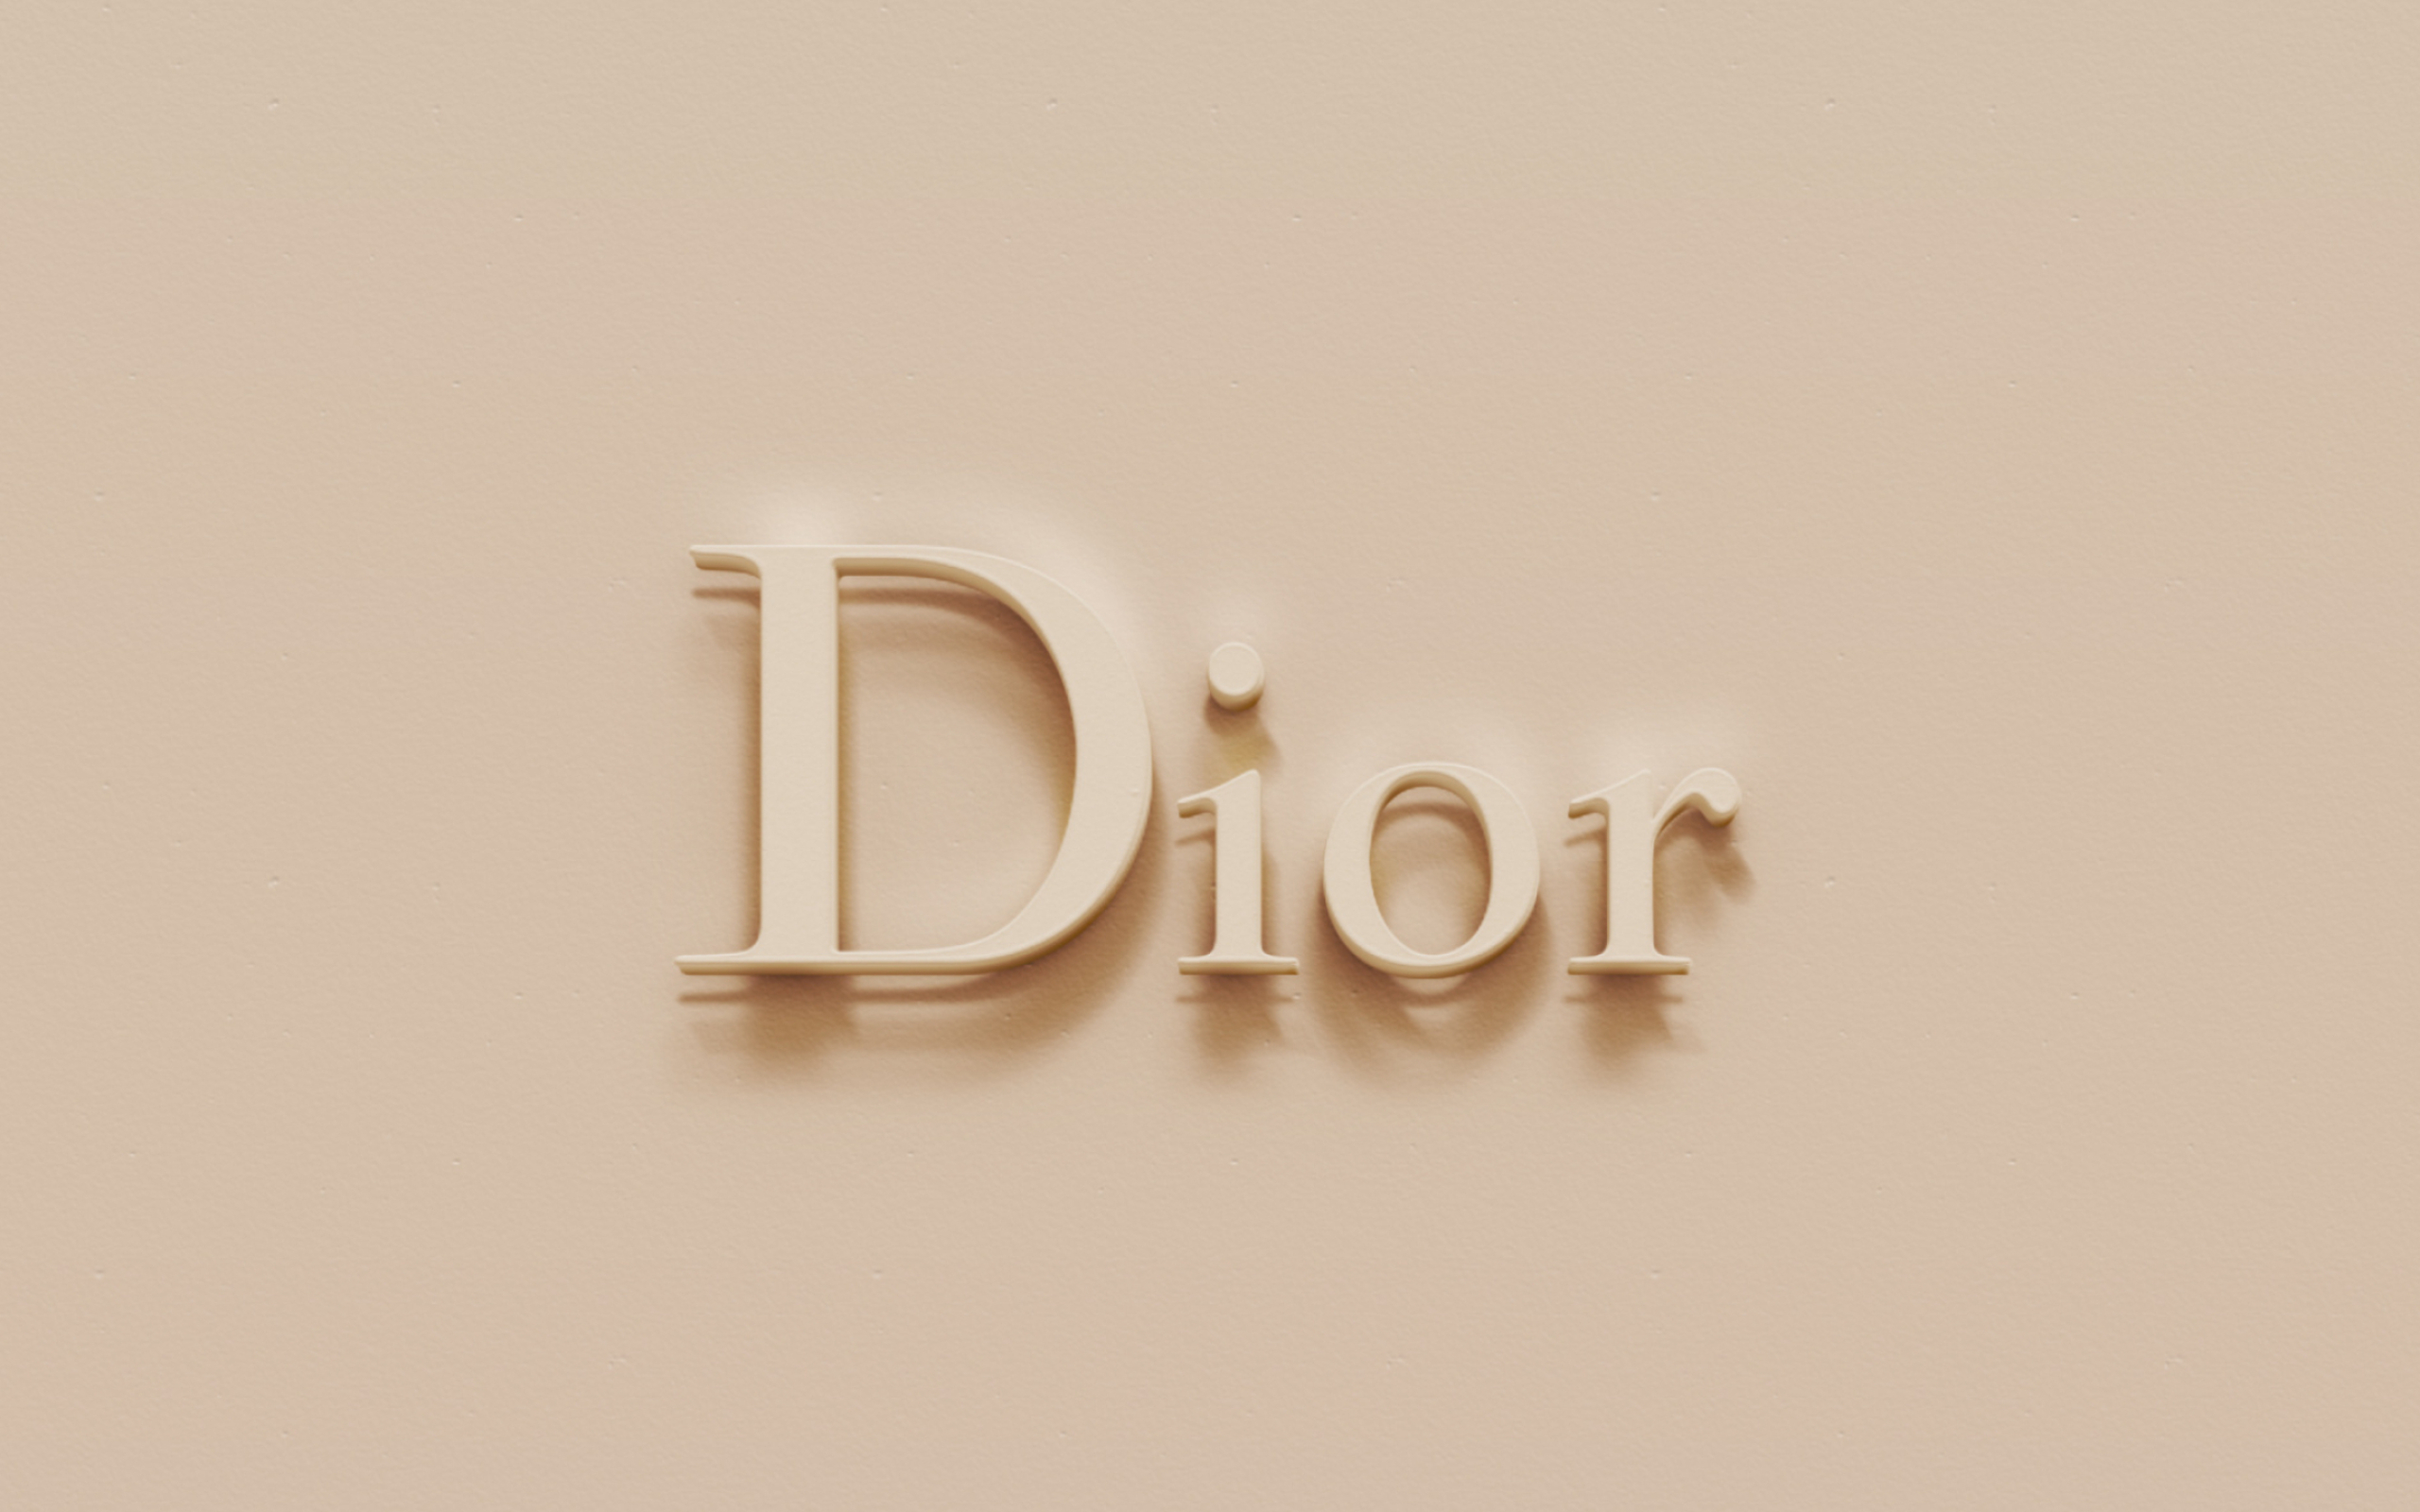 Dior: The creator of recognized haute couture, Ready-to-wear fashion. 2560x1600 HD Wallpaper.